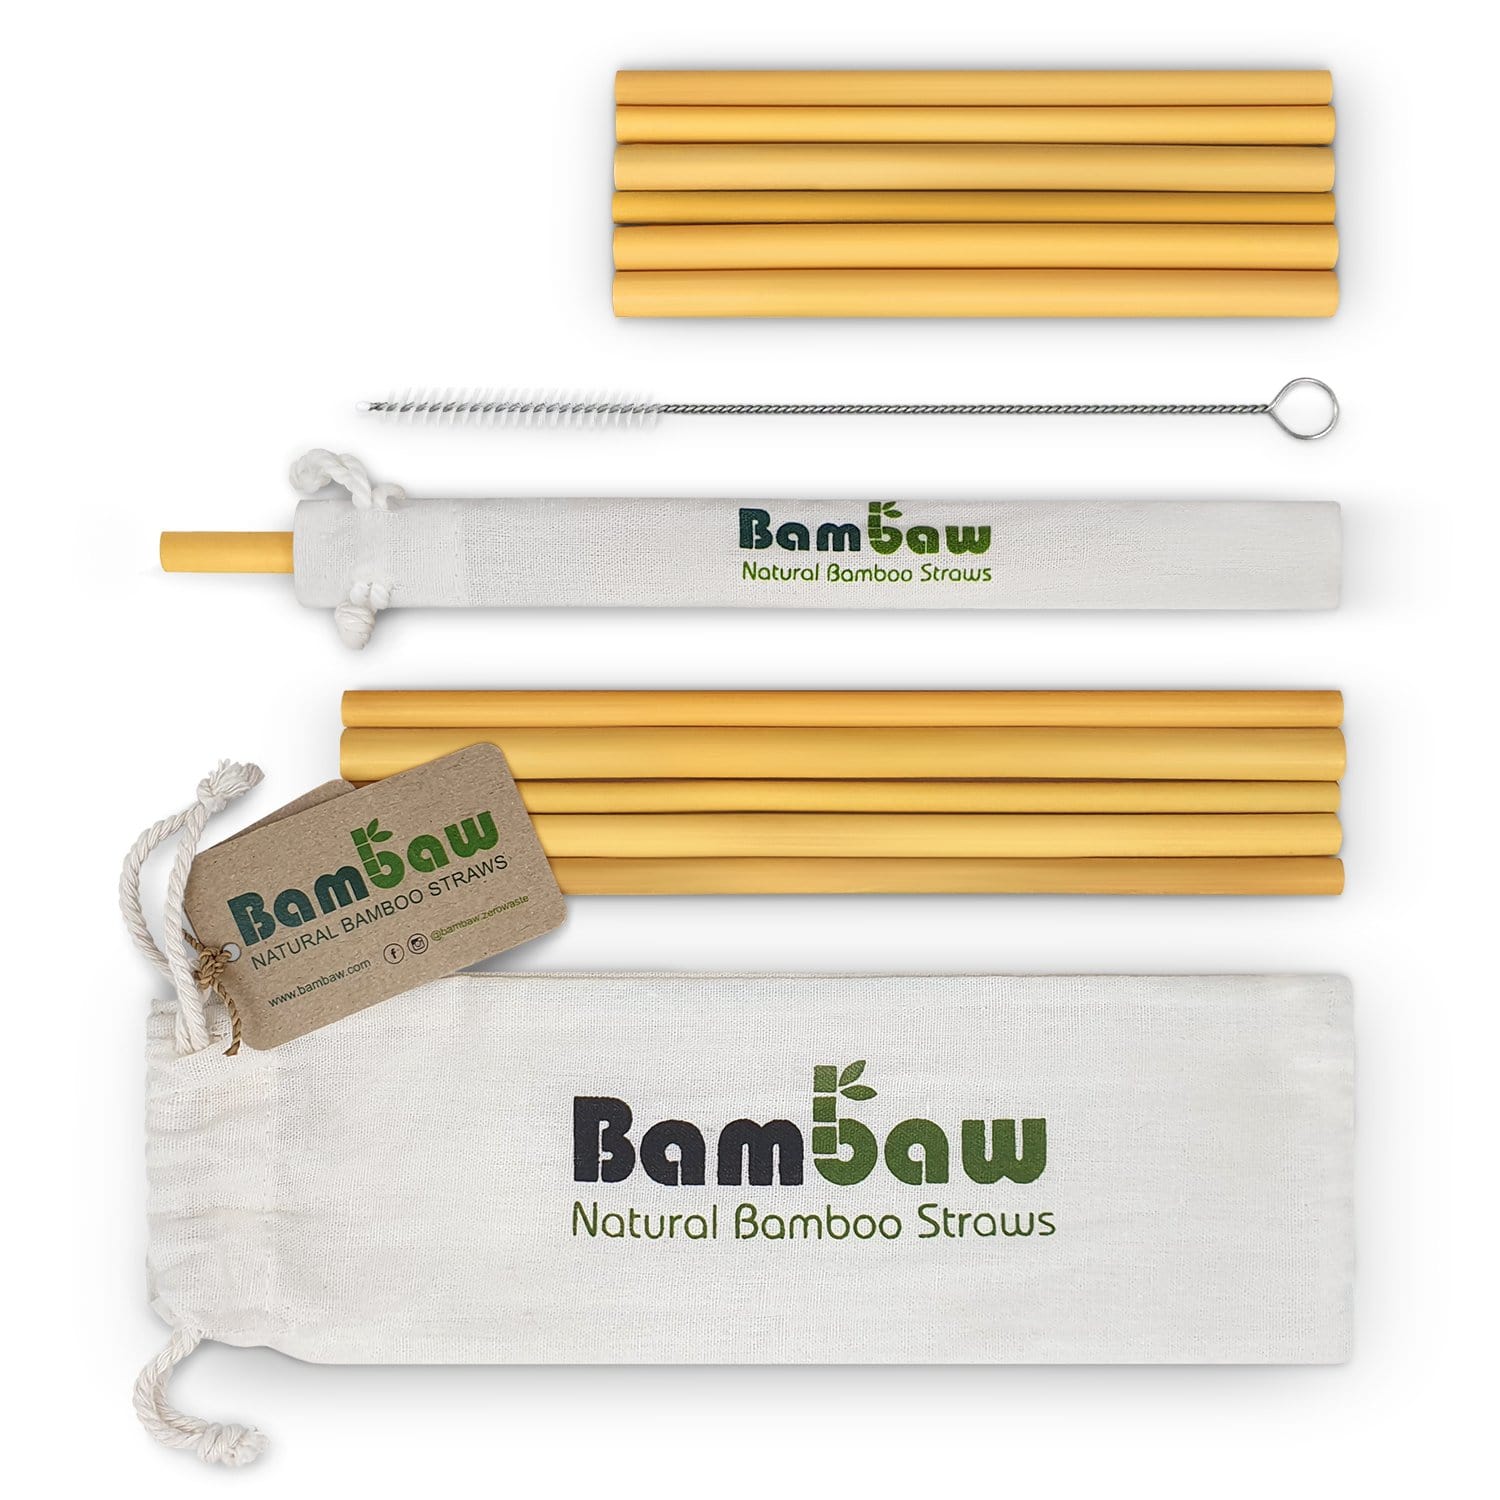 Bambaw Stainless Steel Straws - Ecco Verde Online Shop